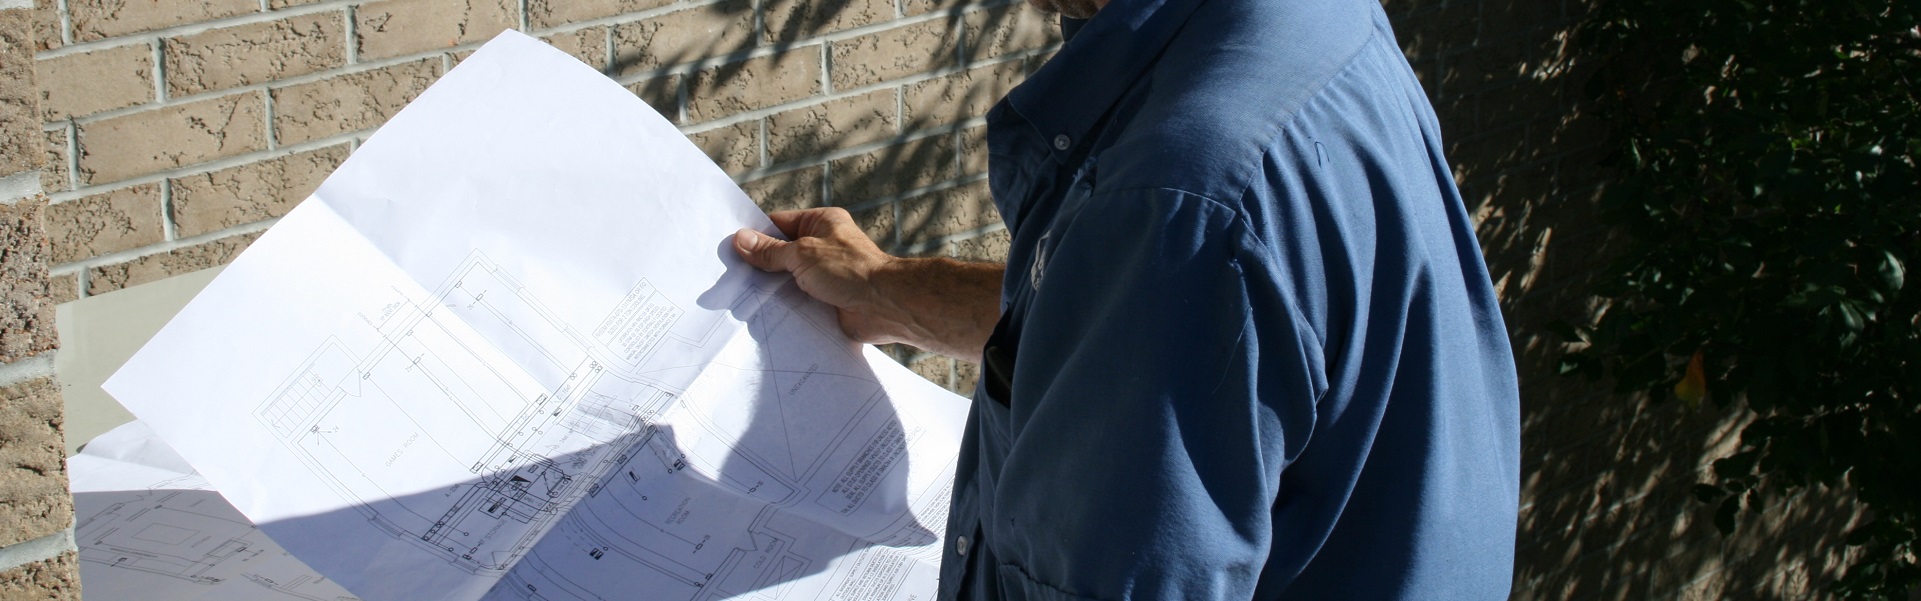 Man holding blueprint